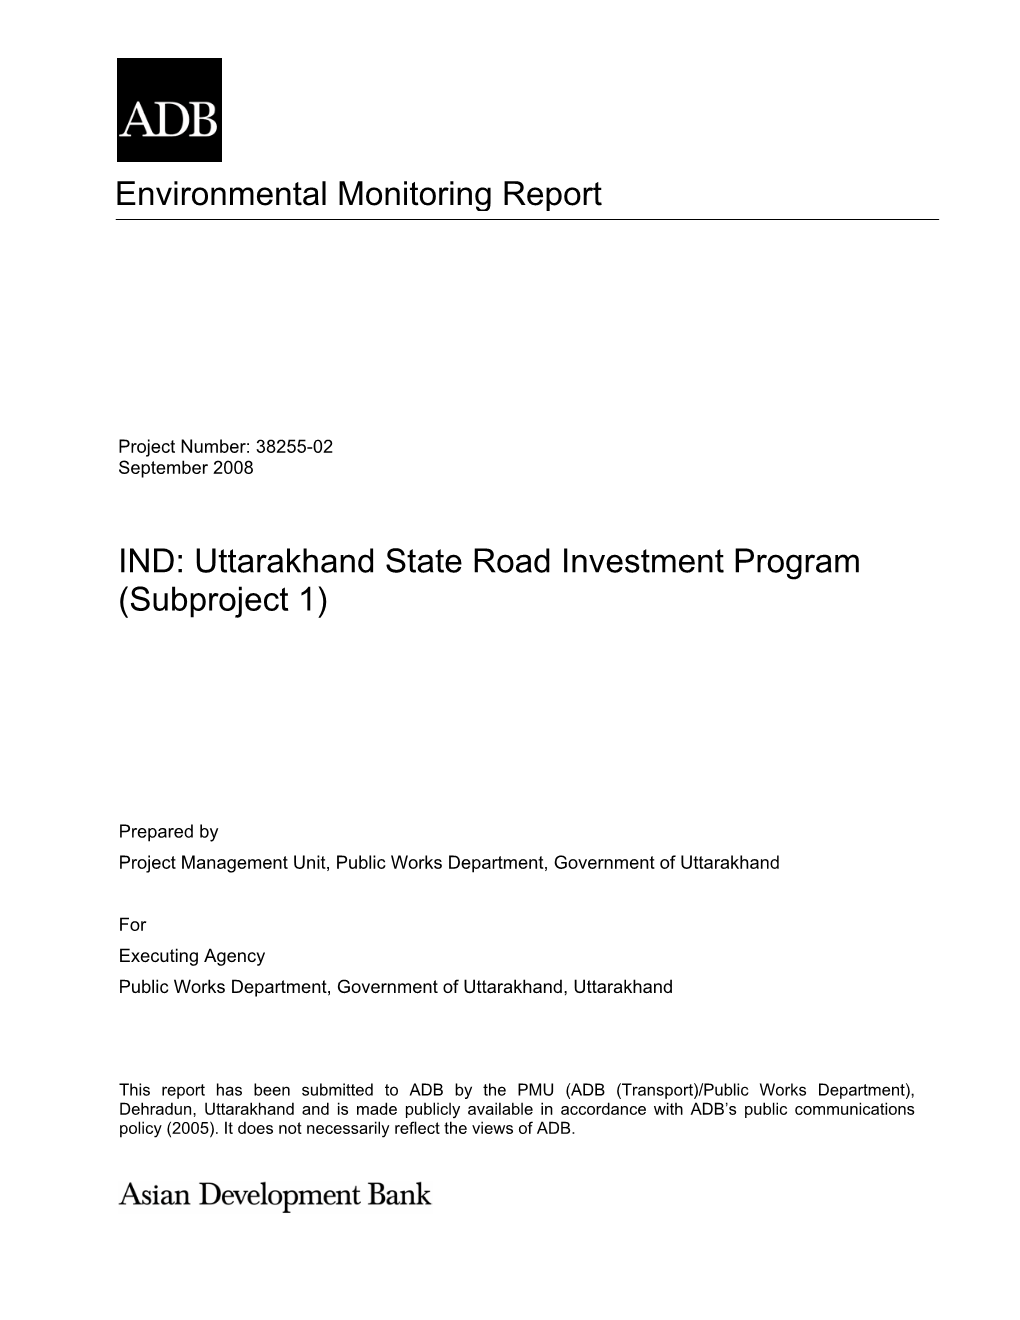 Environmental Monitoring Report IND: Uttarakhand State Road Investment Program